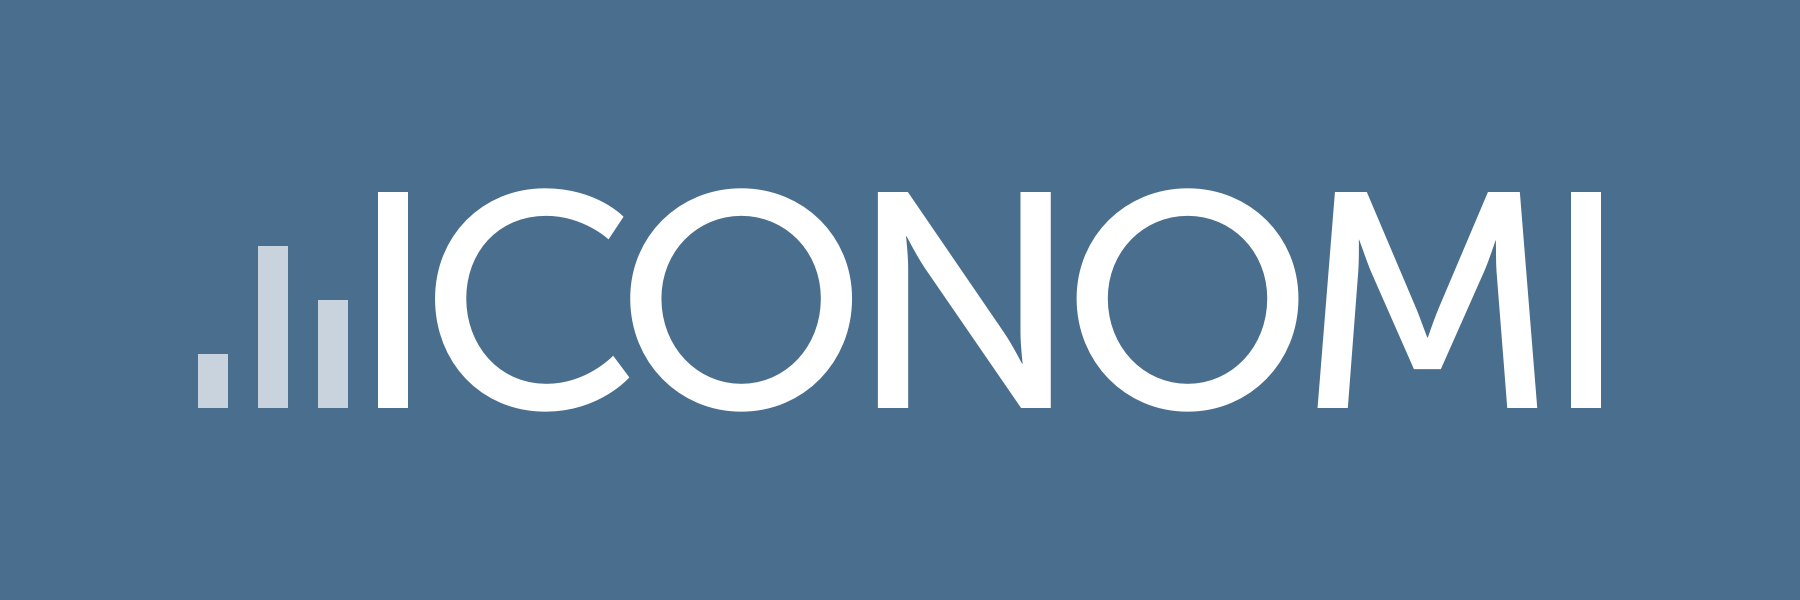 ICONOMI_logo_white_on_blue.png